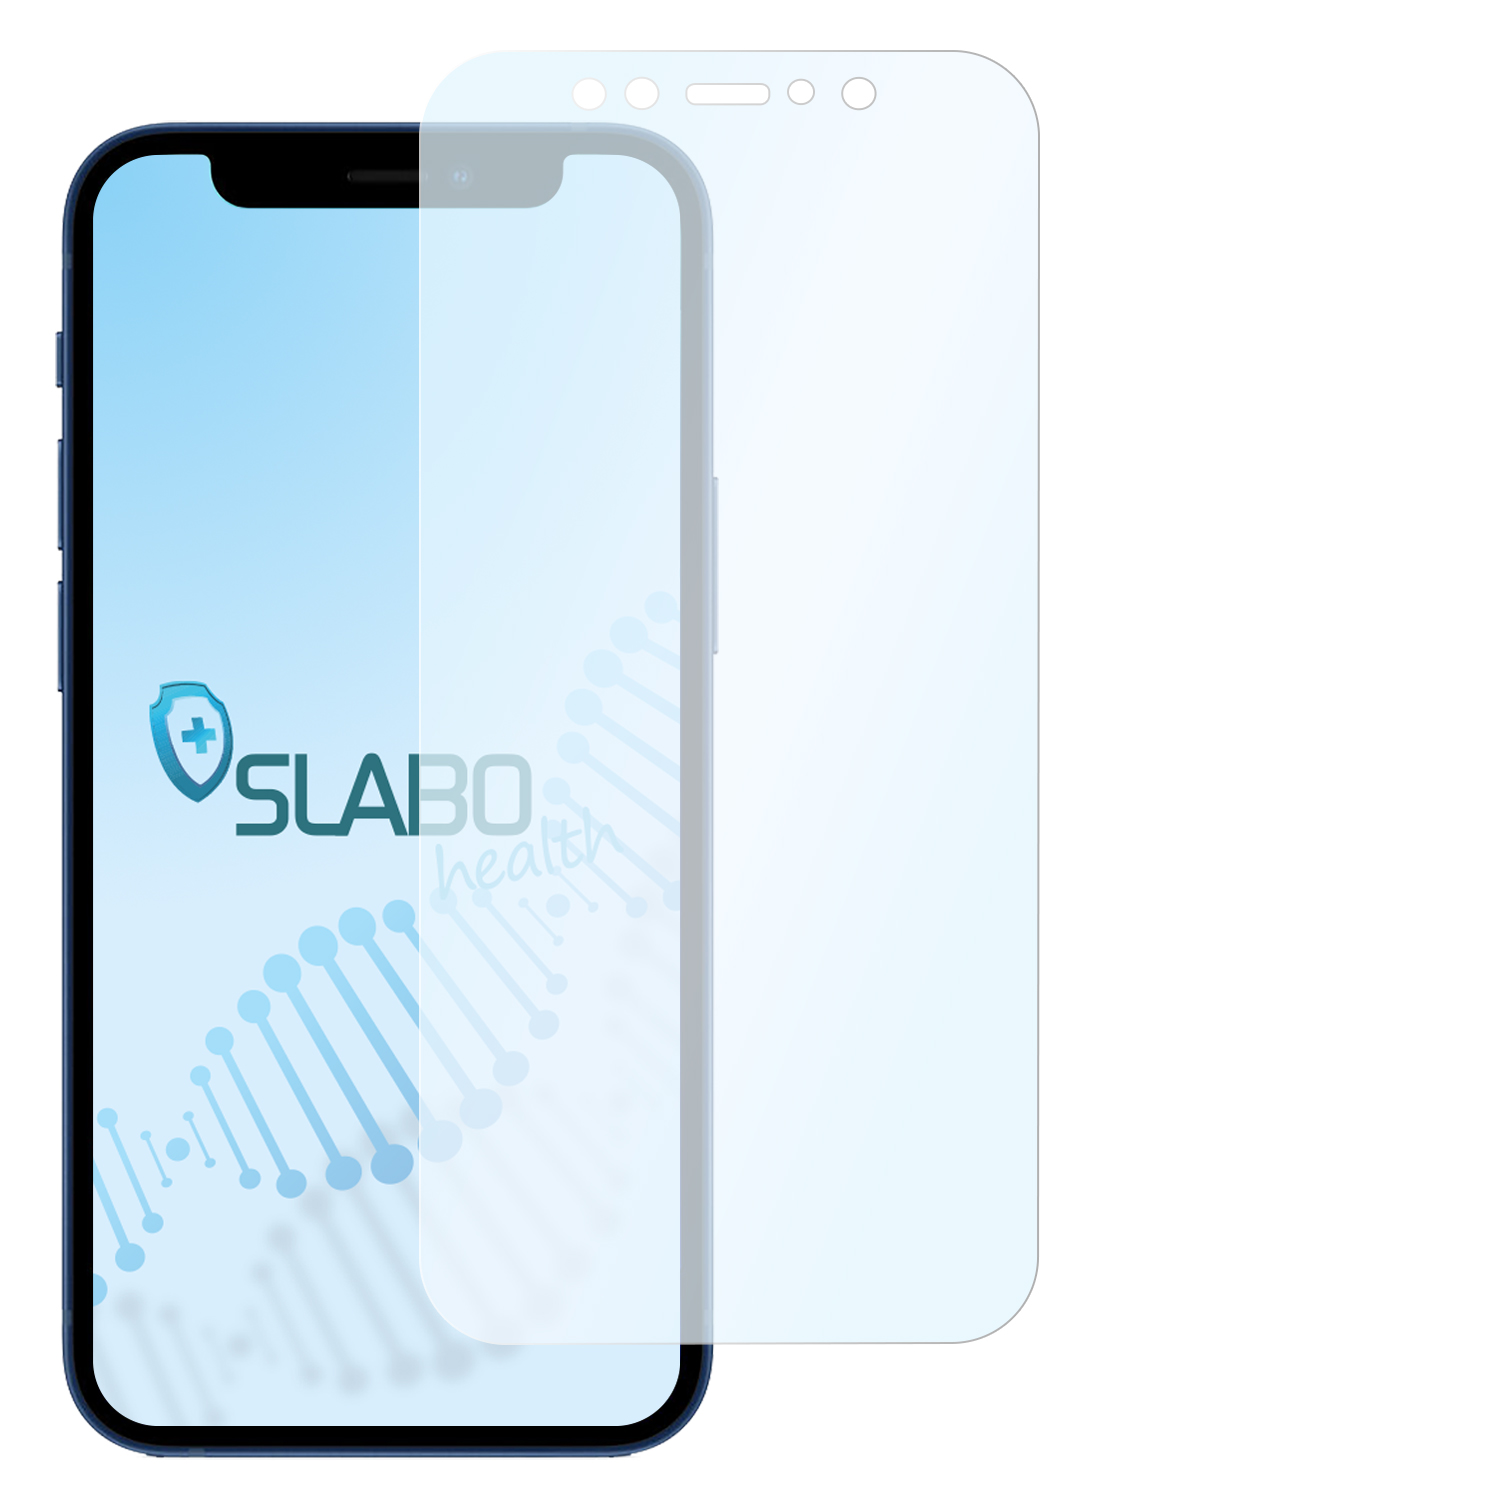 SLABO antibakterielle flexible Hybridglasfolie Displayschutz(für Mini) iPhone Apple 12